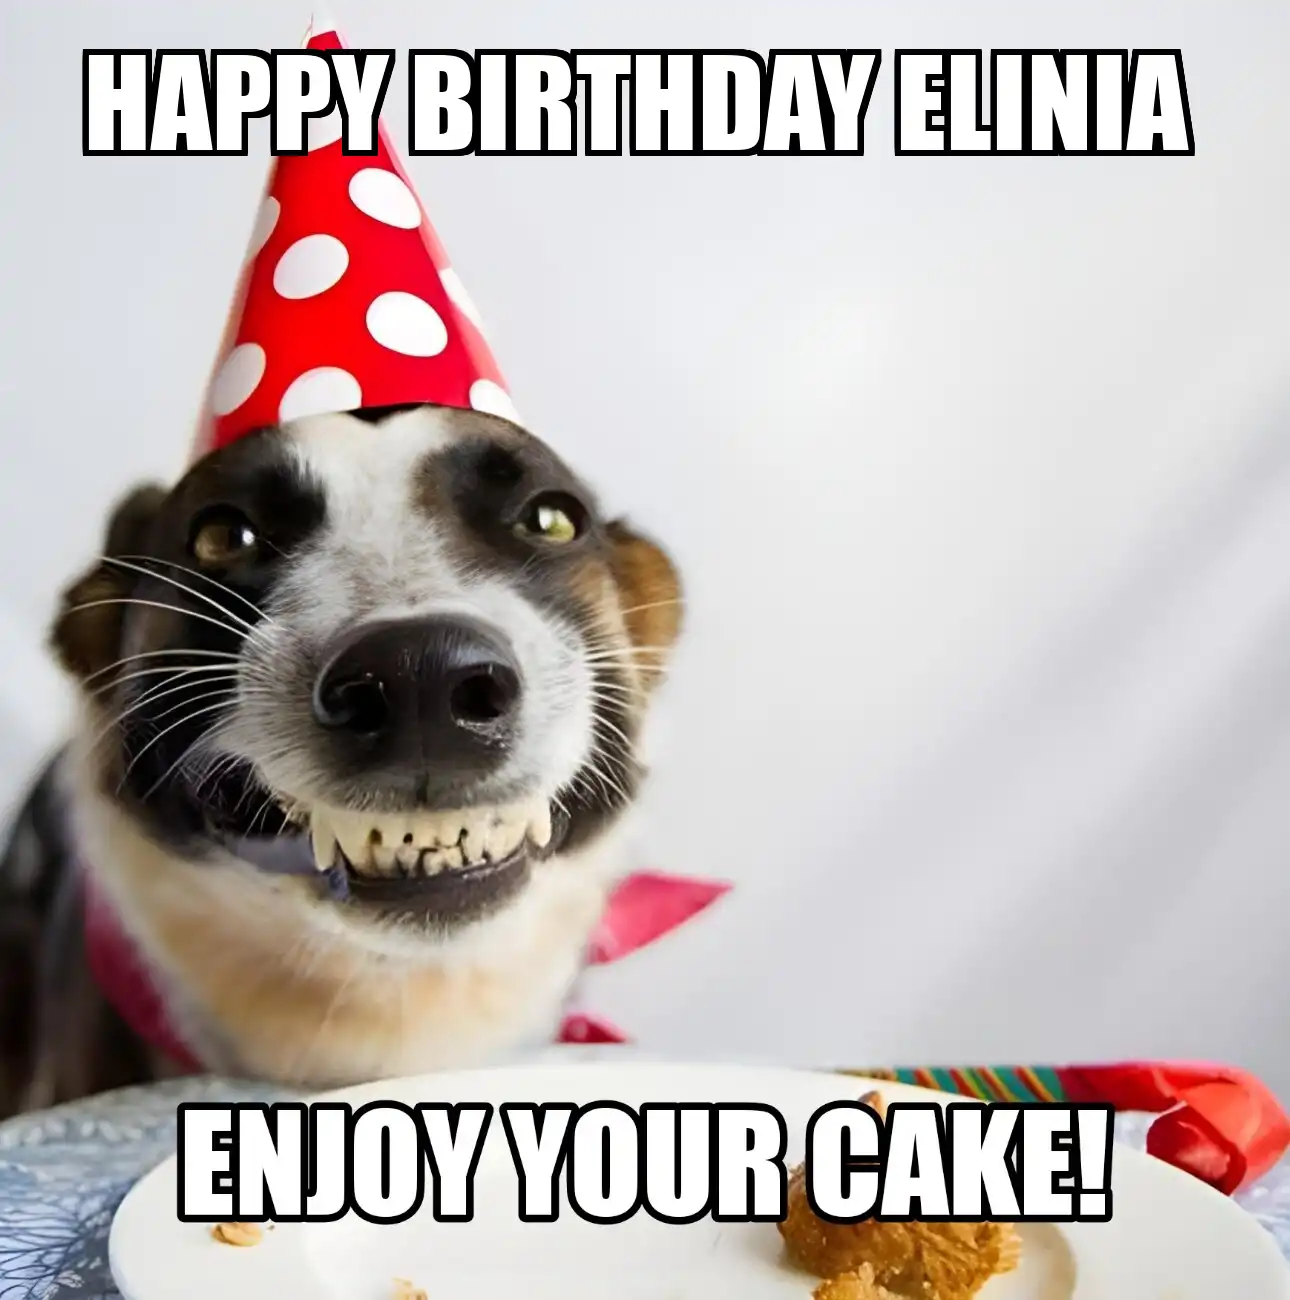 Happy Birthday Elinia Enjoy Your Cake Dog Meme